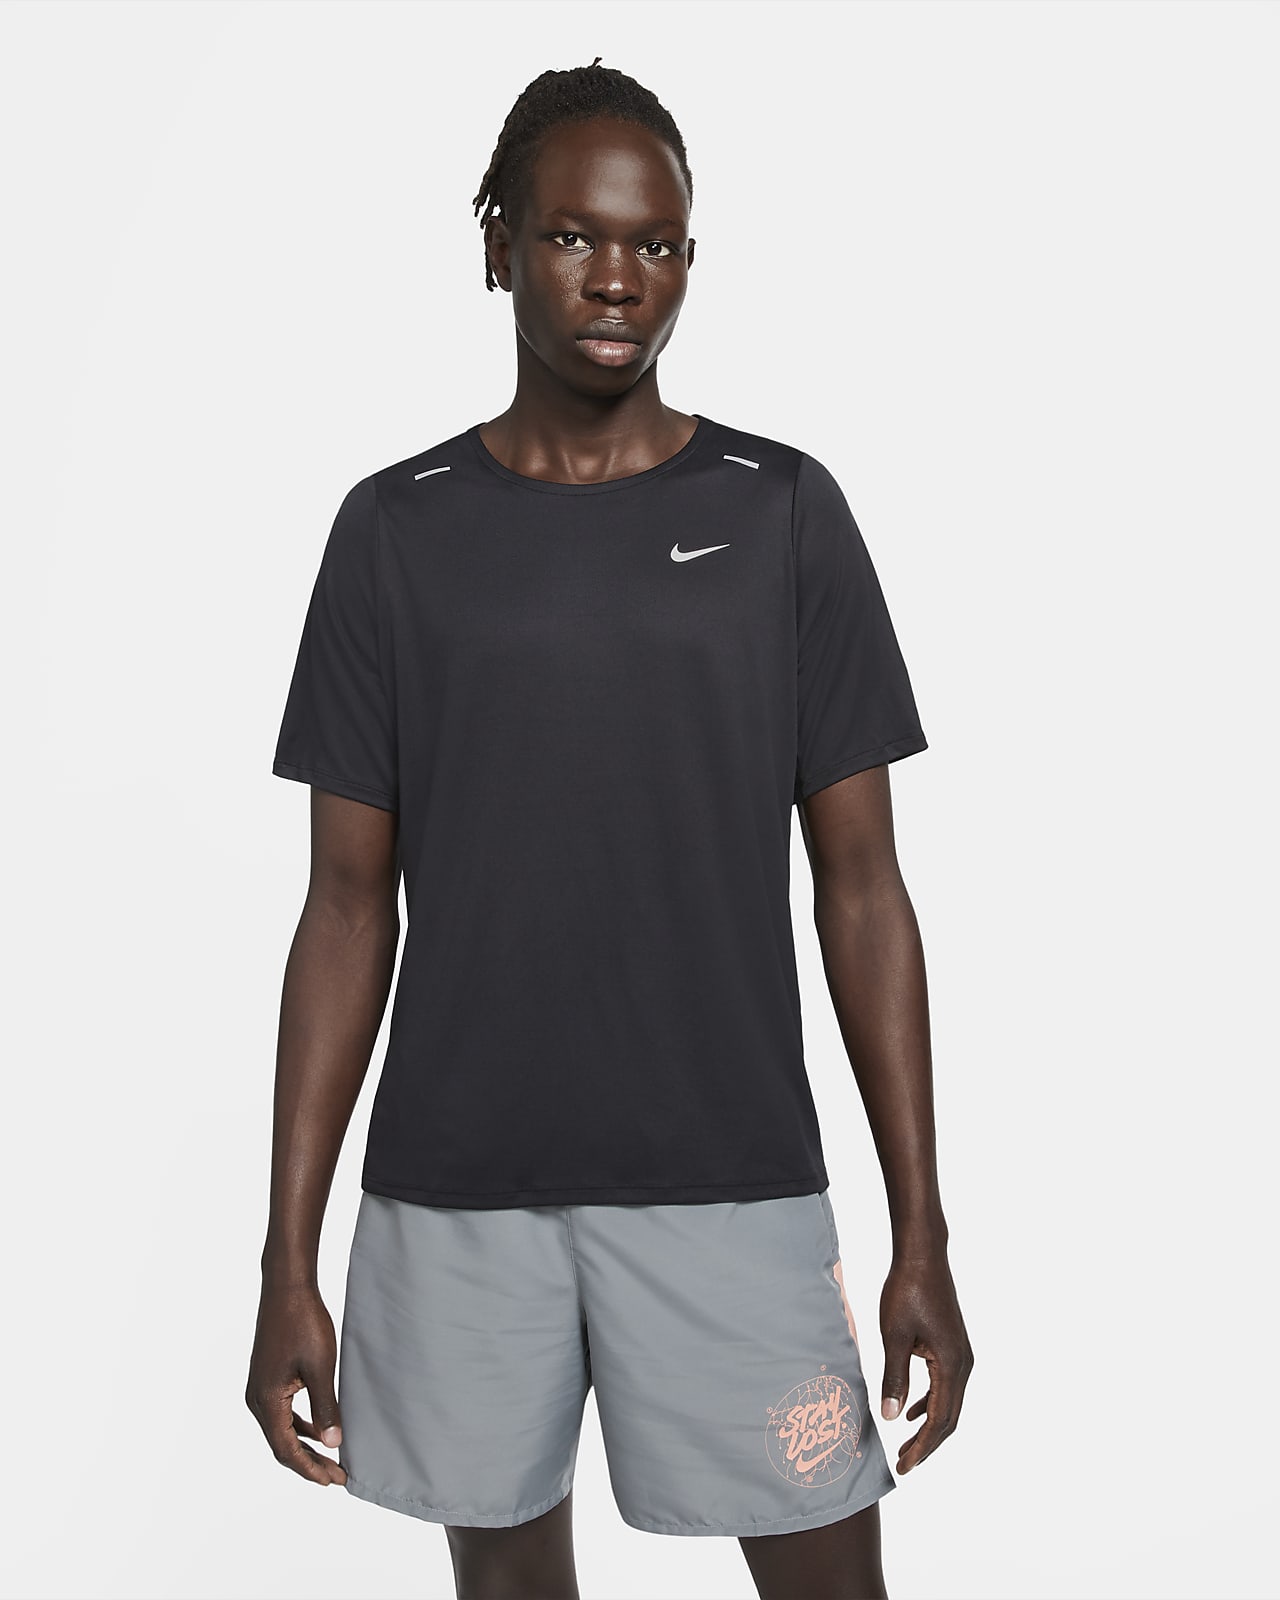 Nike Rise 365 Wild Run Men's Short-Sleeve Top